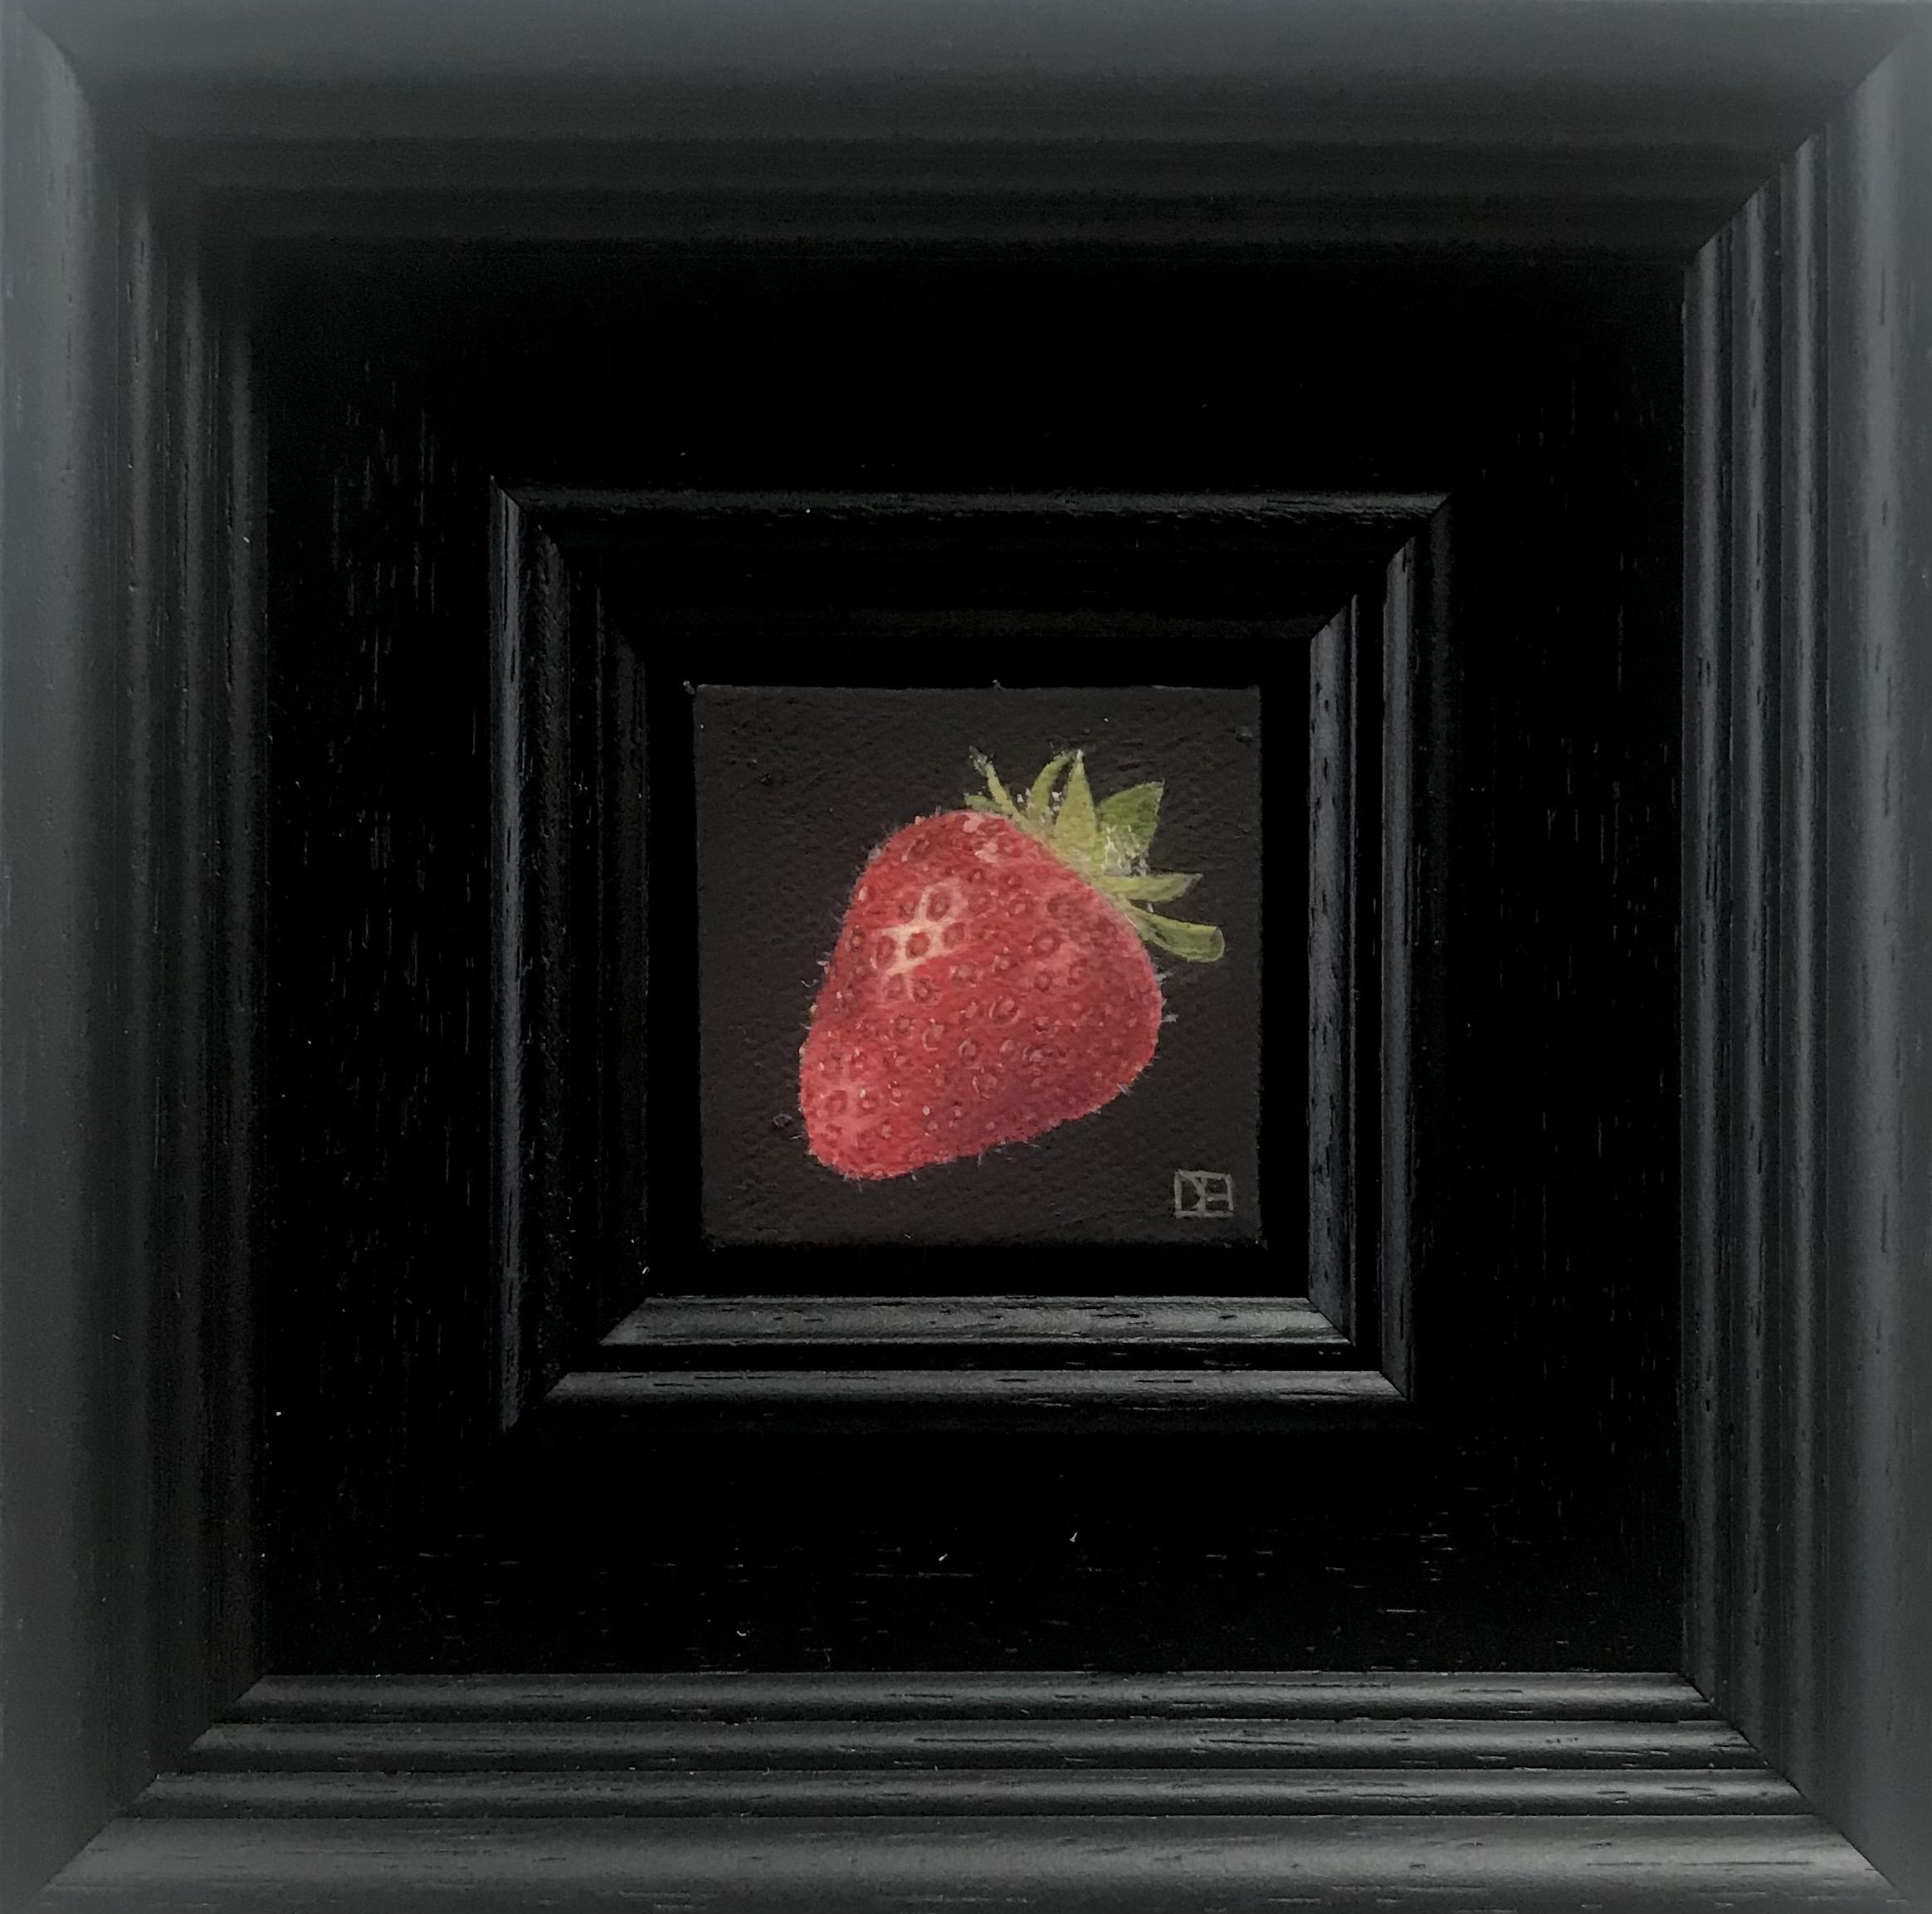 Pocket Strawberry by Dani Humberstone